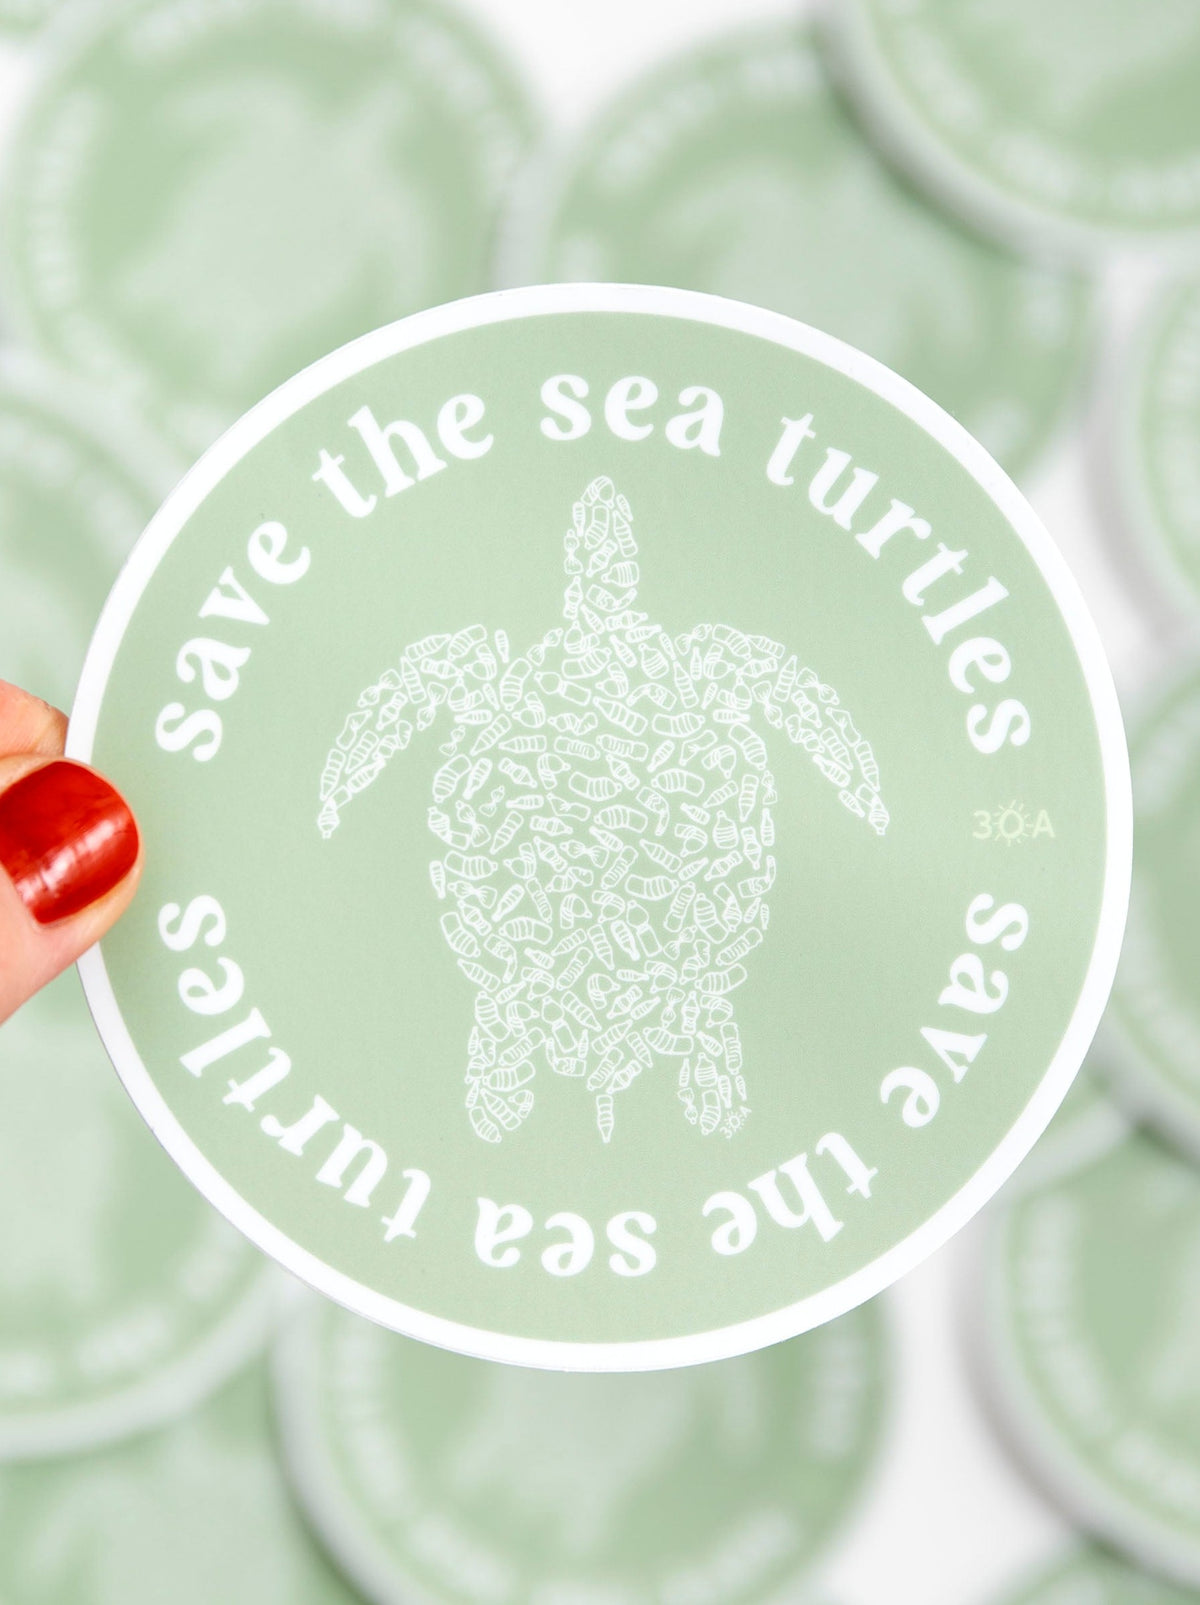 Save the Sea Turtles Sticker